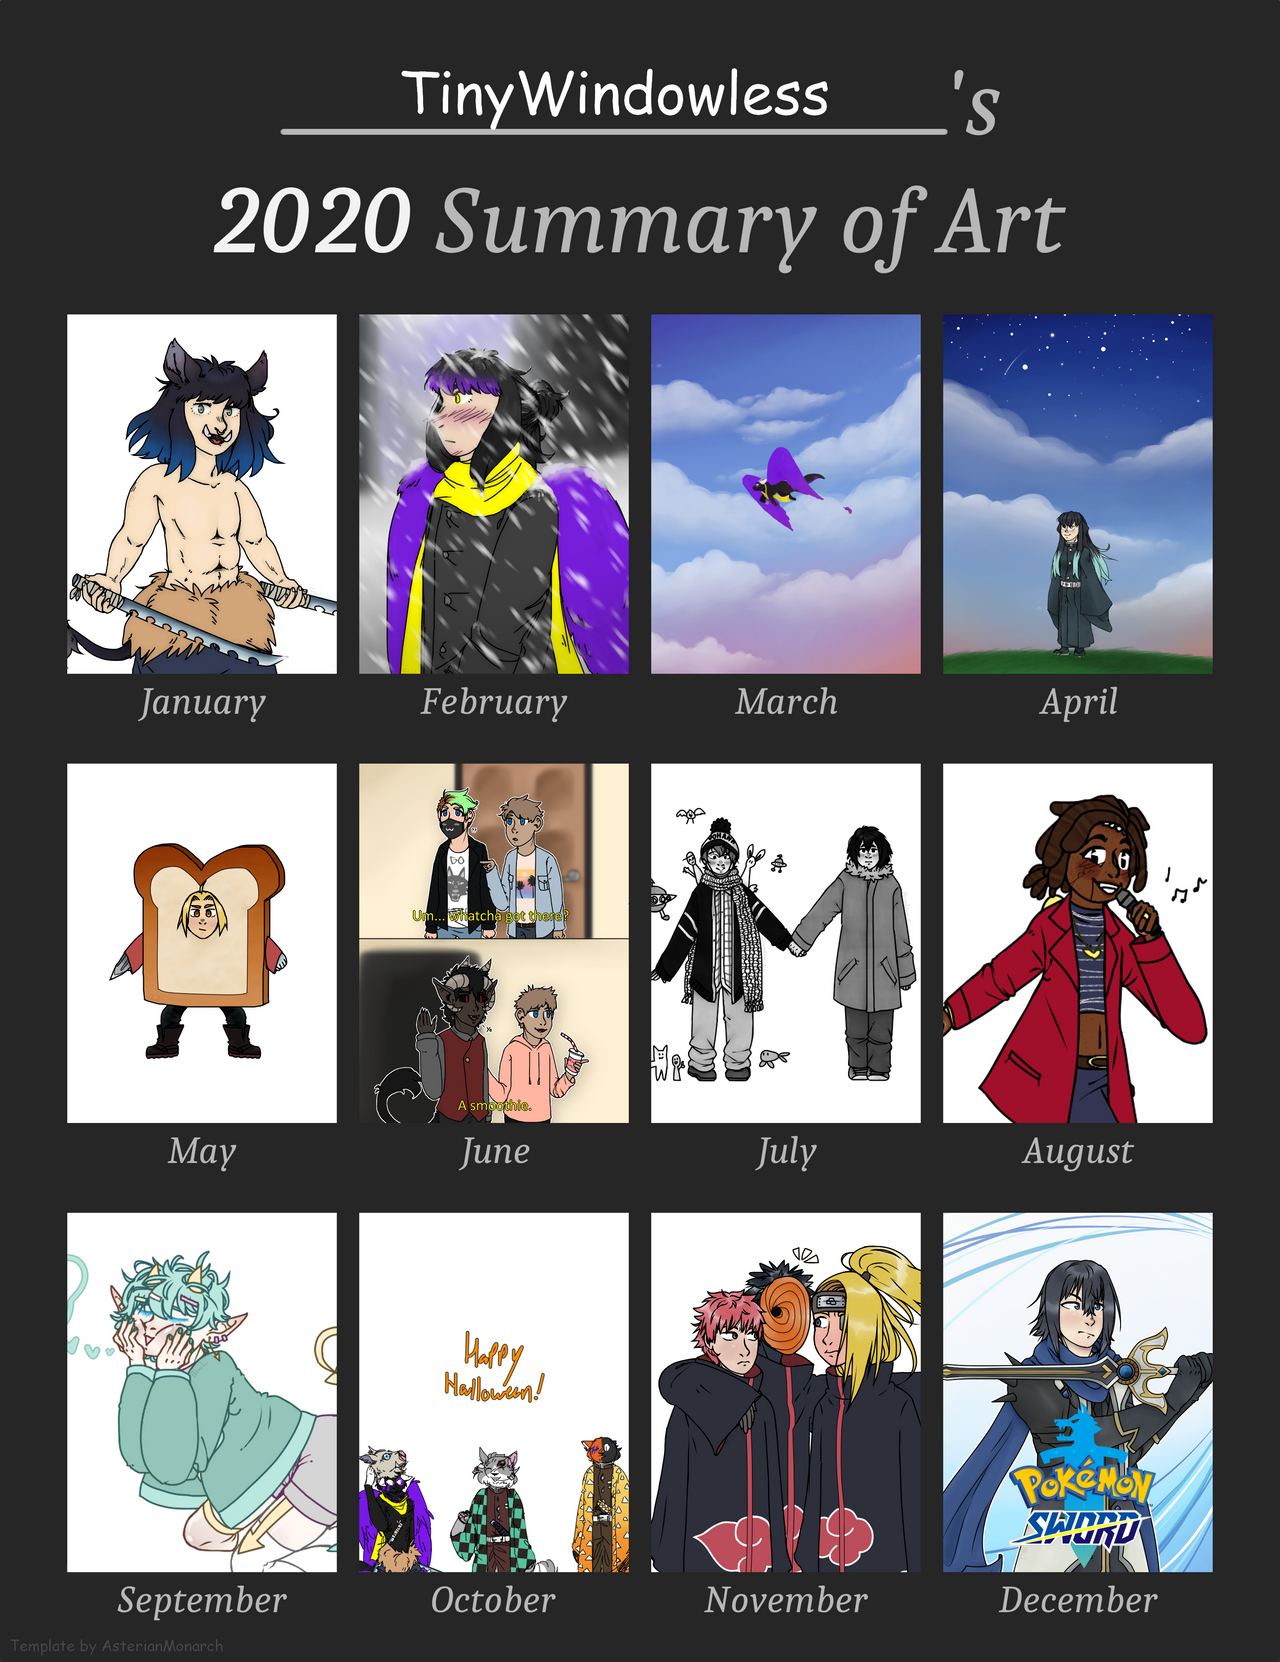 2020_summary_of_art_by_tinywindowless_de